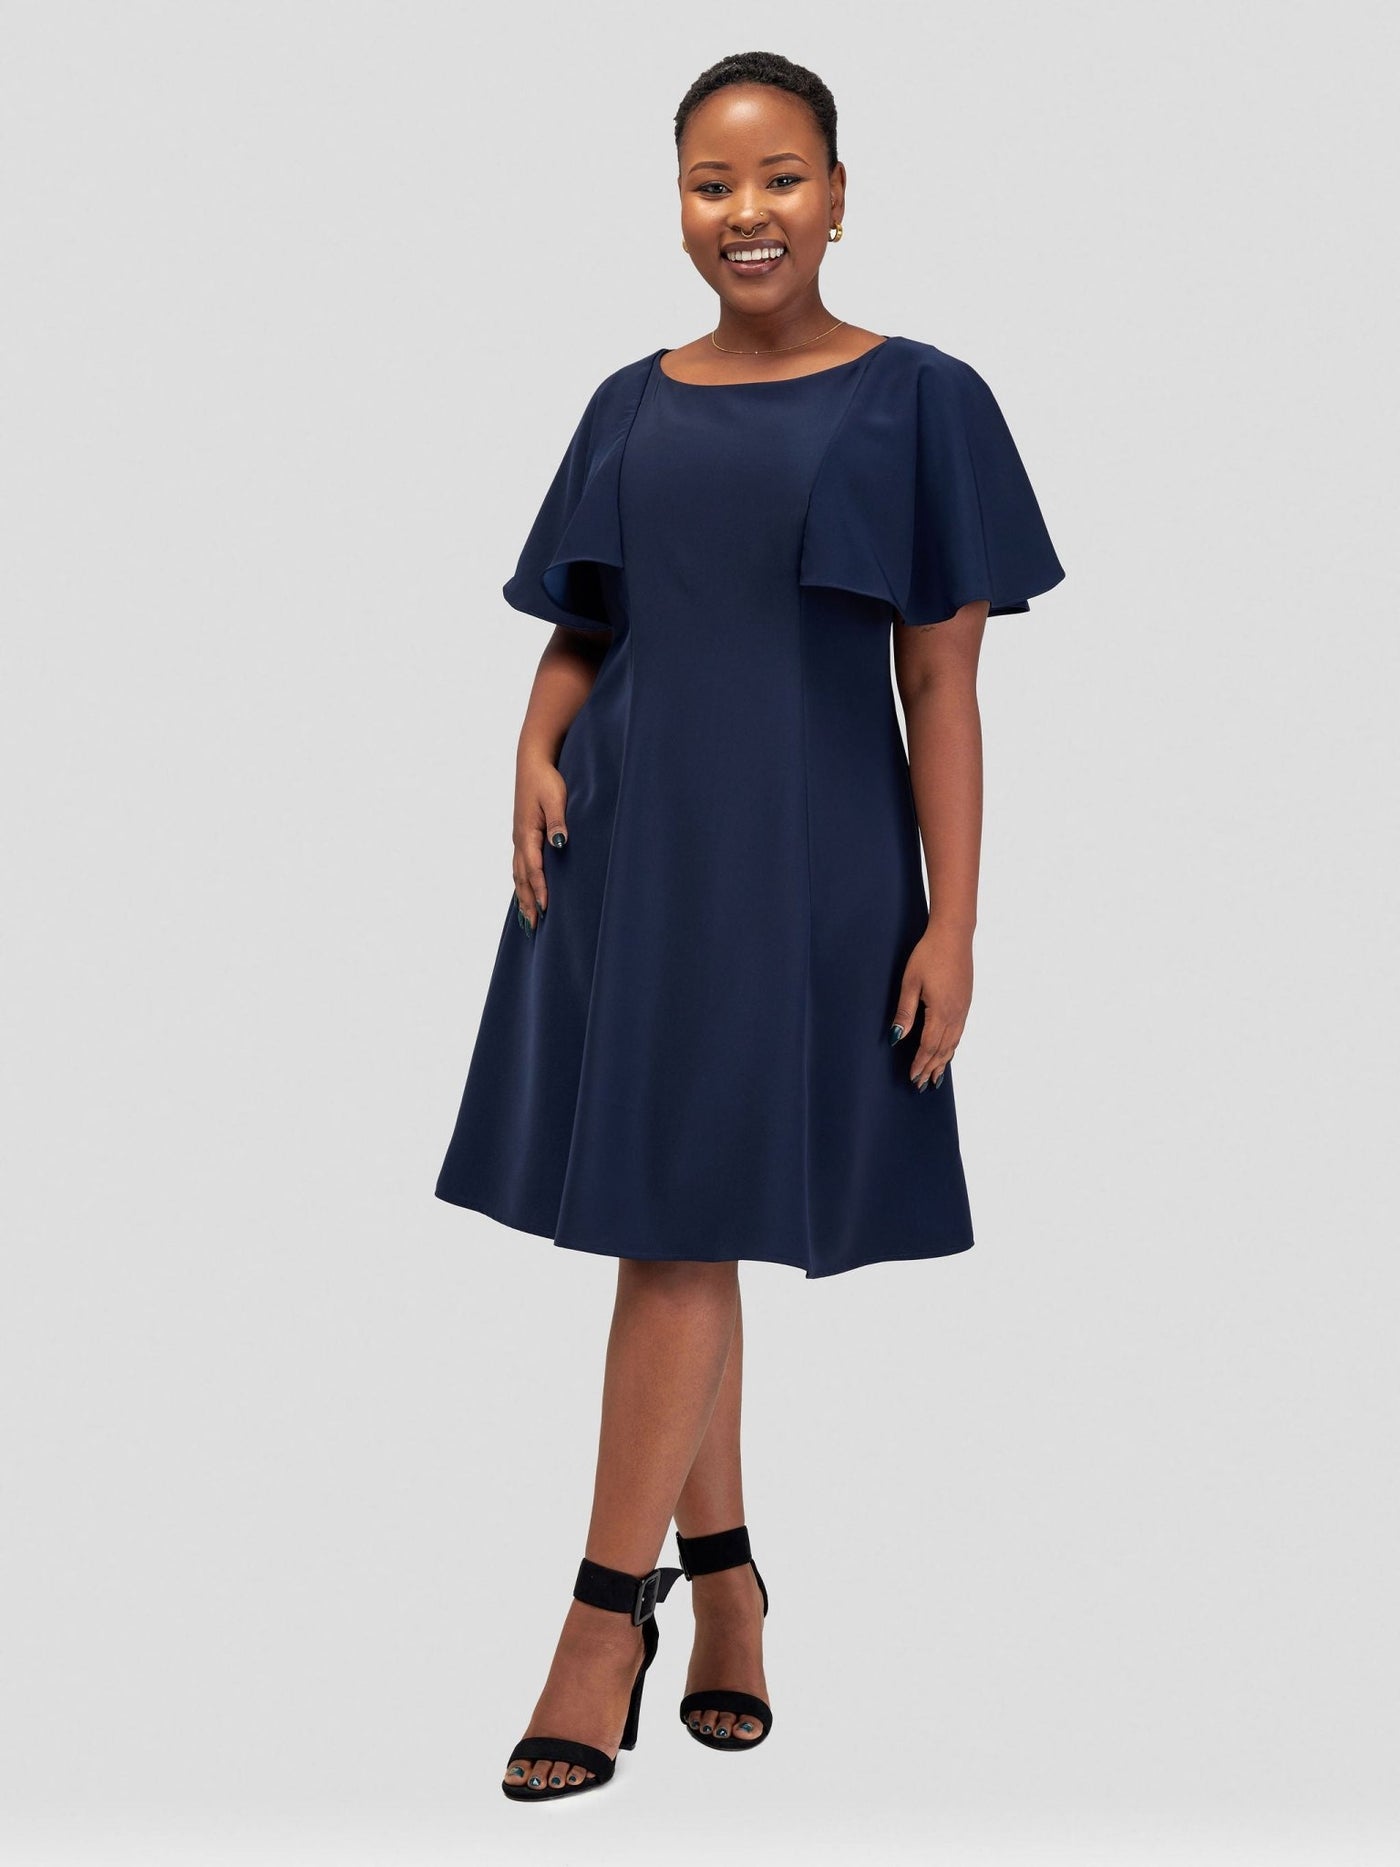 Vivo Sani Cape Sleeve Round Neck A-line Dress - Navy Blue - Shopzetu